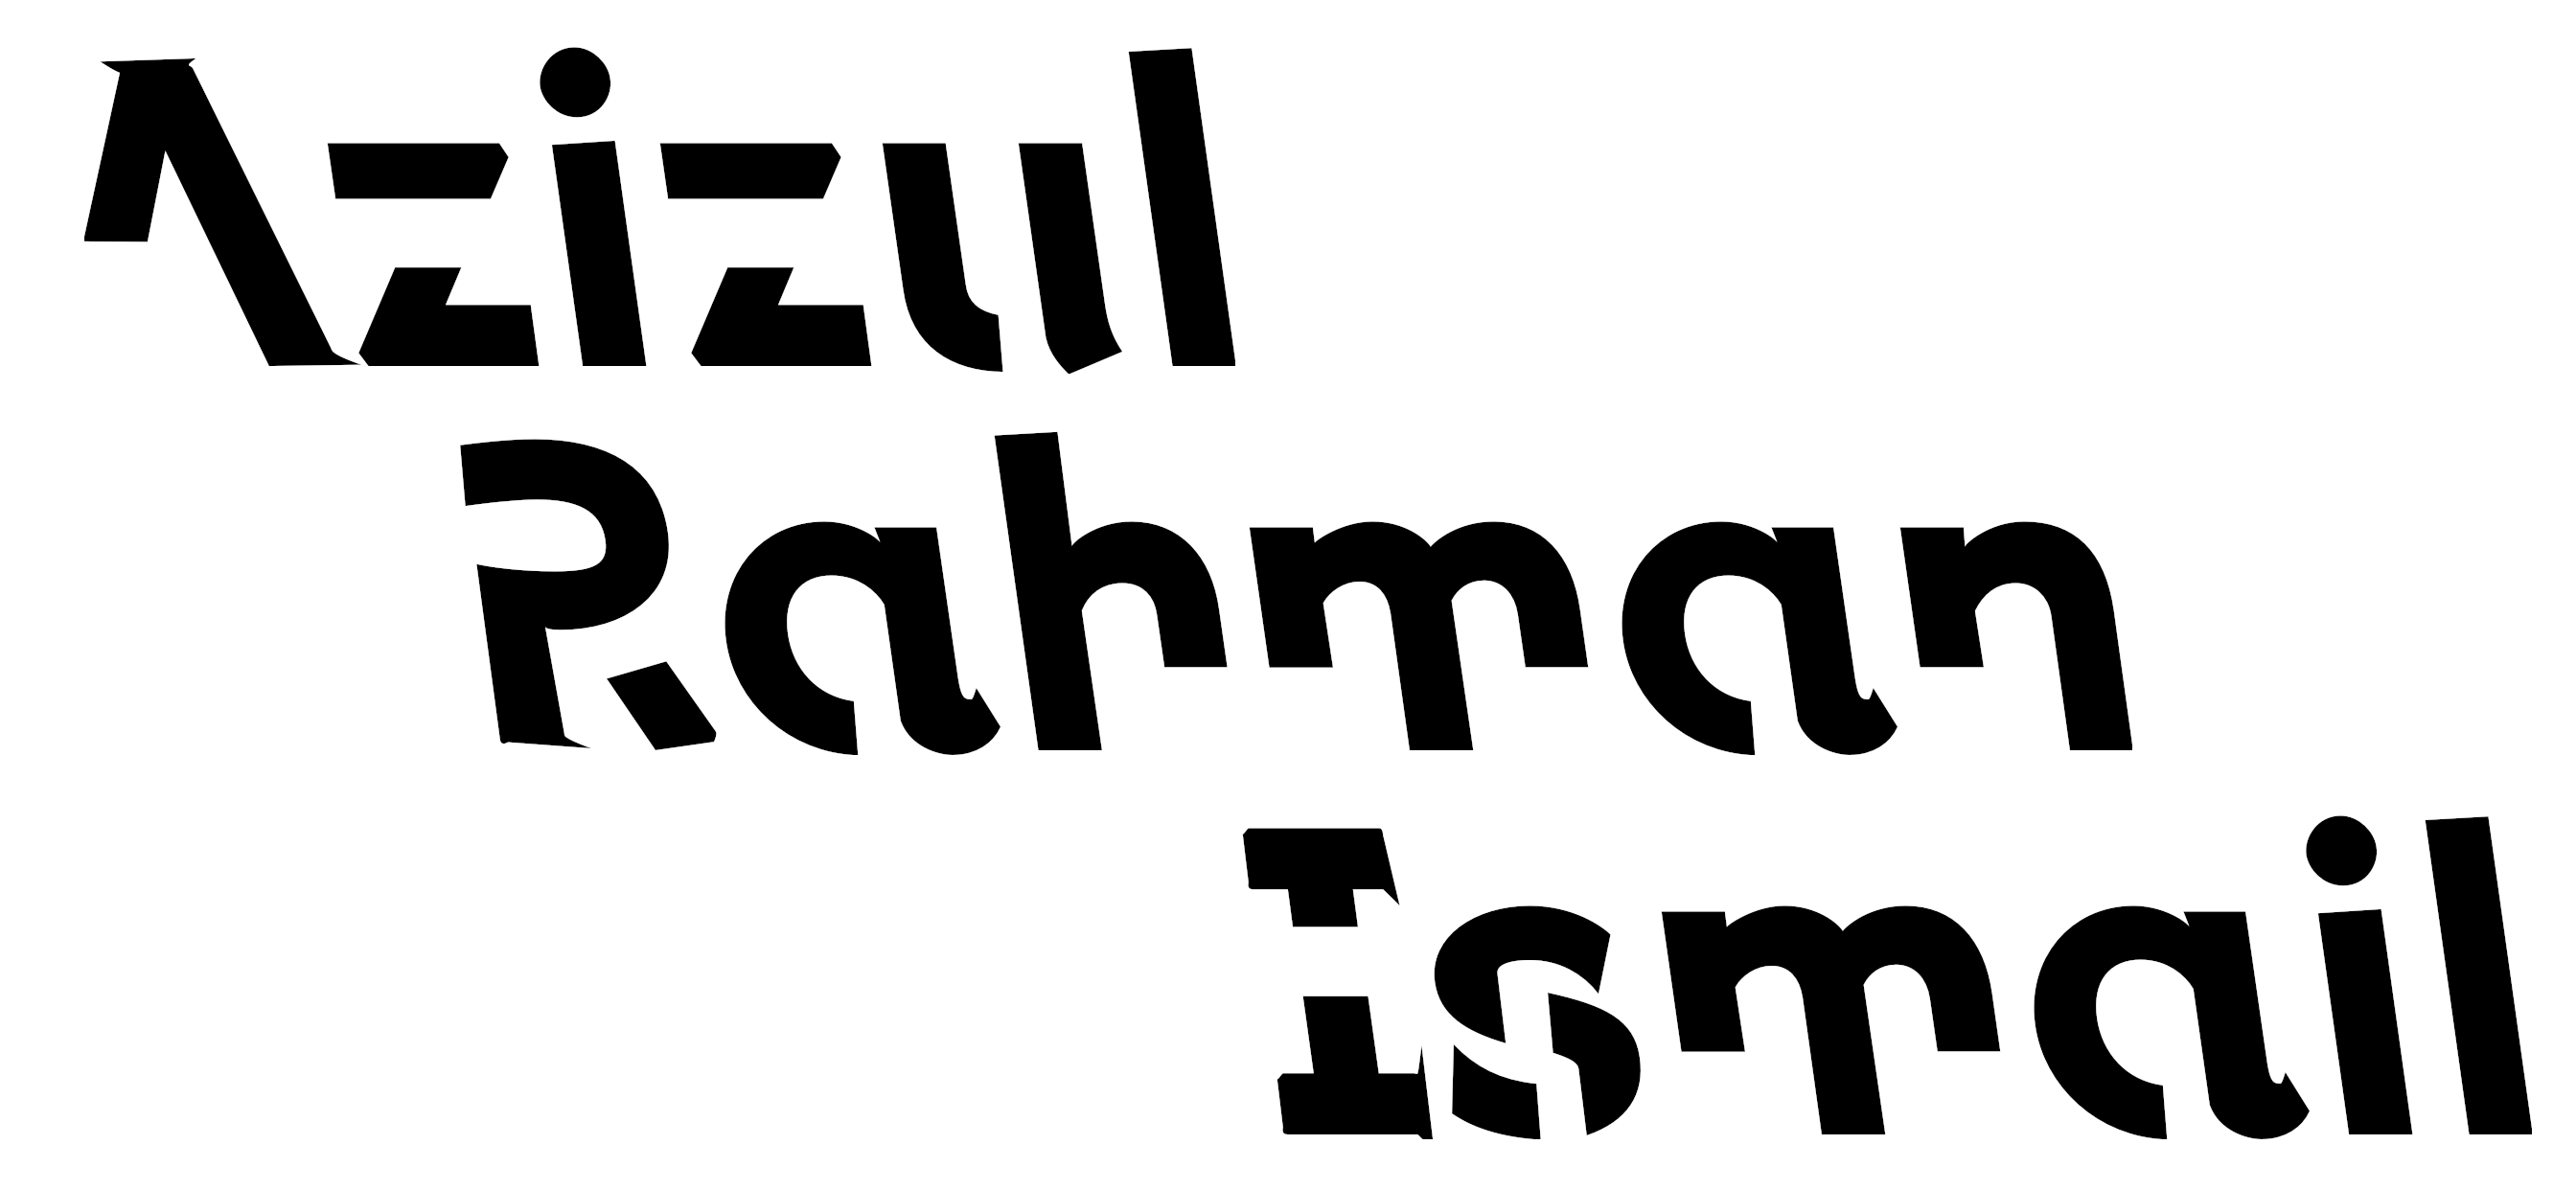 Azizul Rahman Ismail